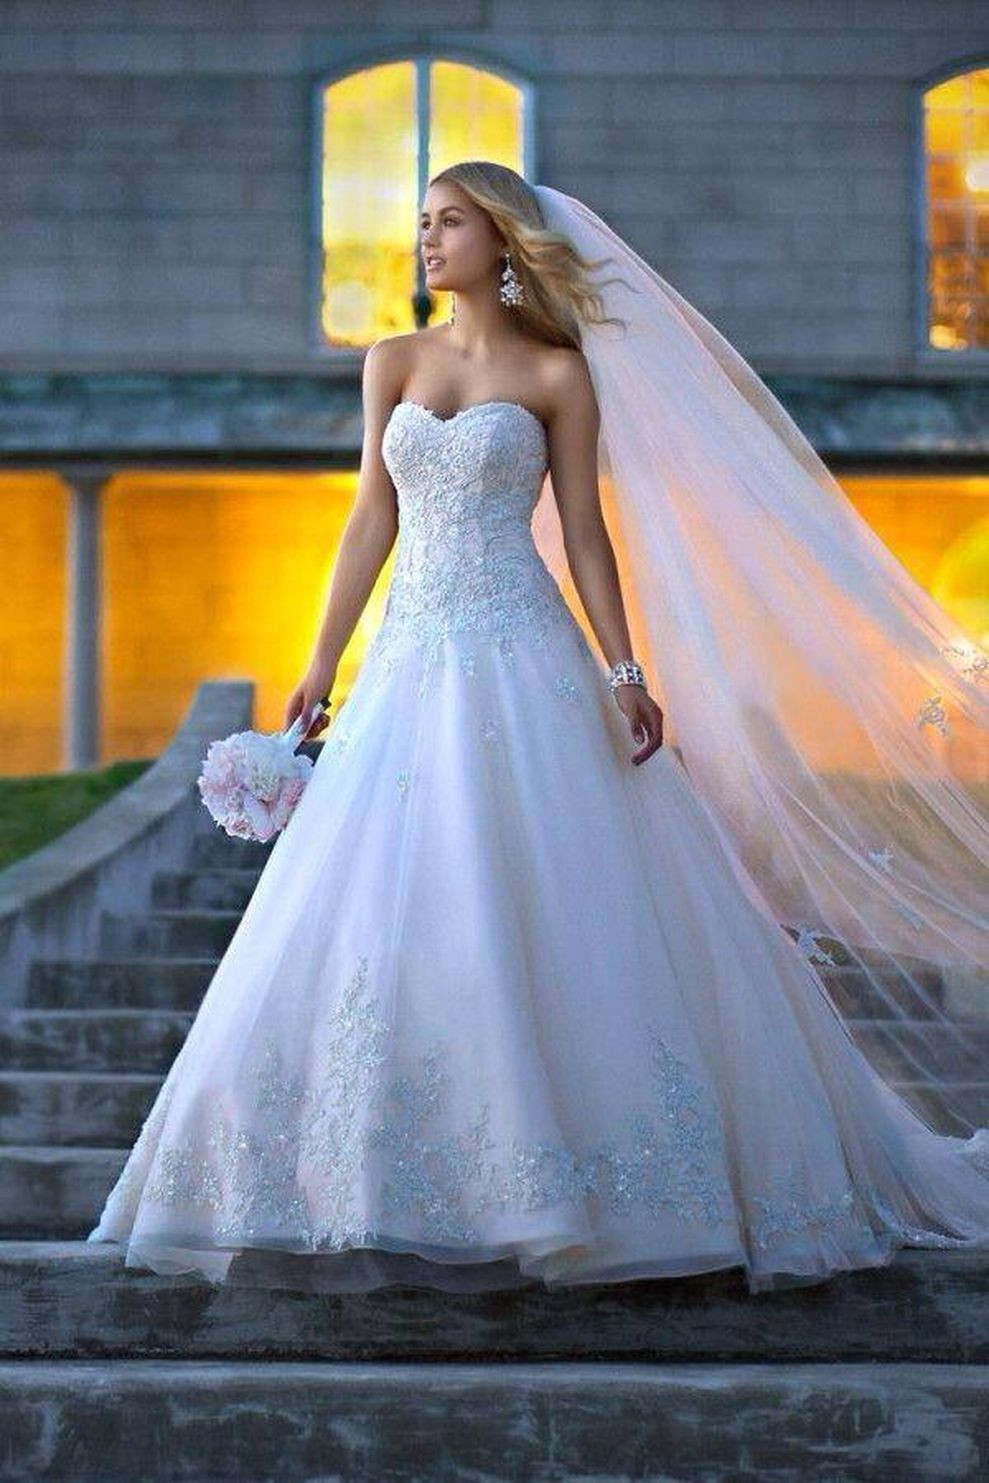 Cute Dresses For A Wedding
 27 Cute and Stunning Big Wedding Dress Ideas VIs Wed